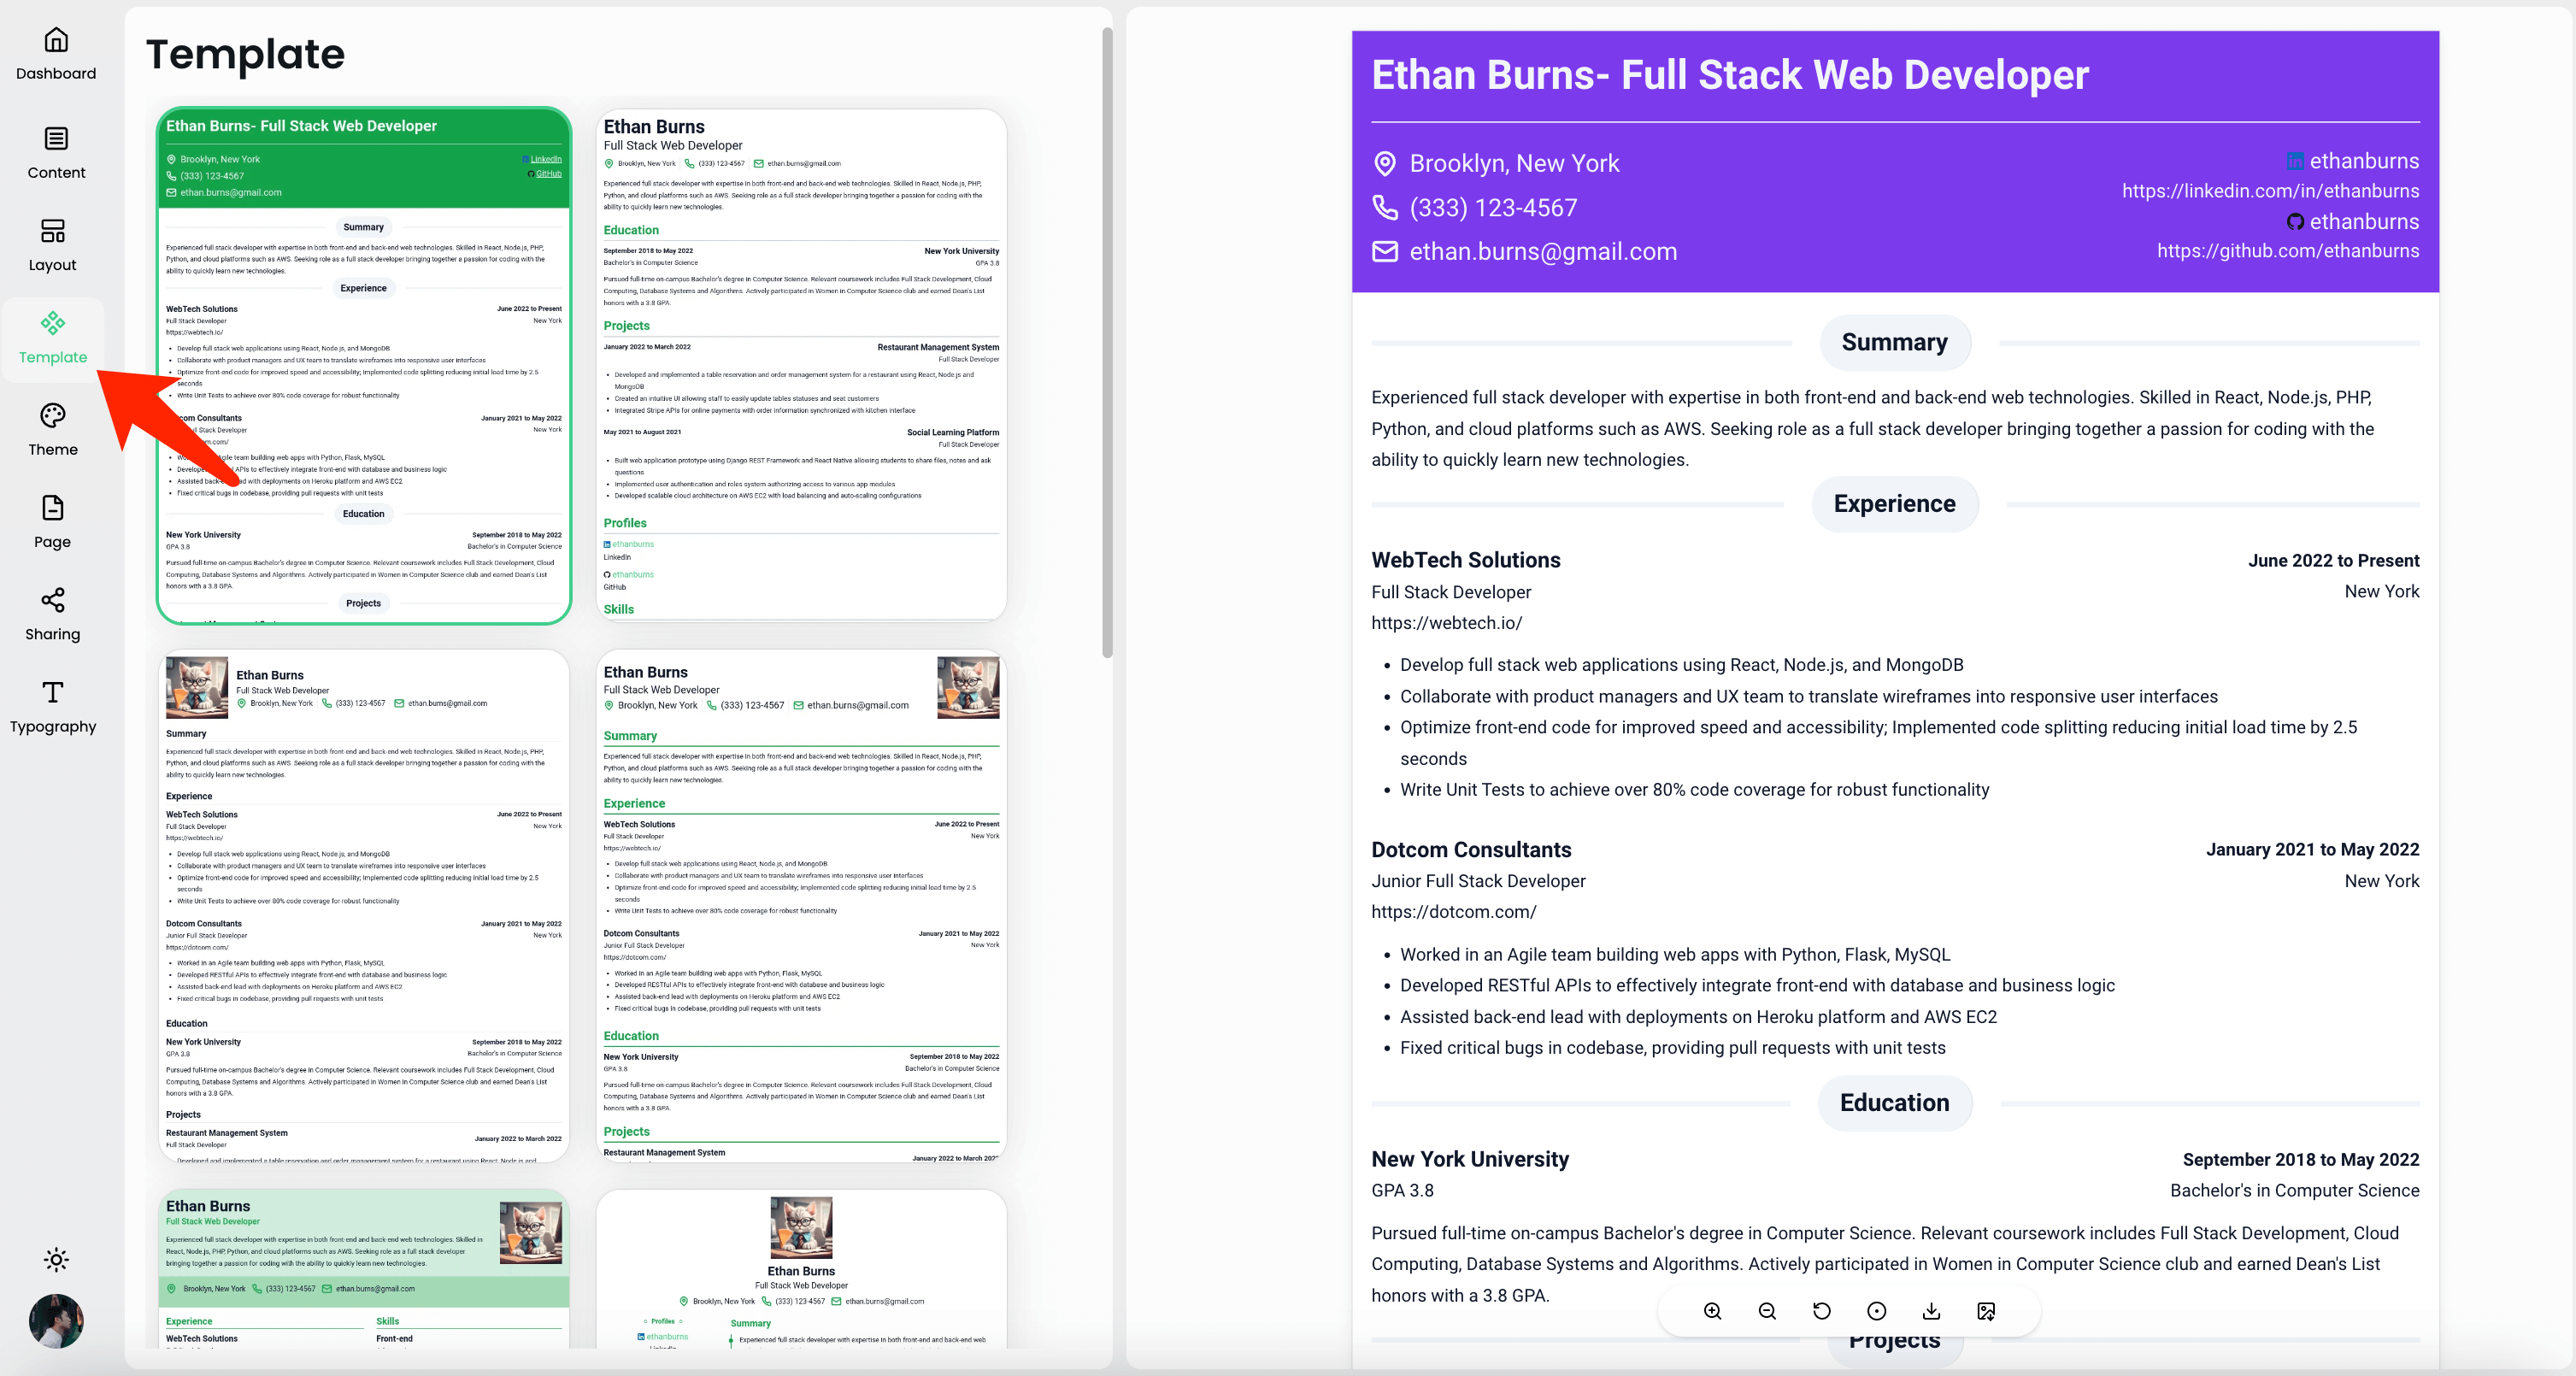 resume templates